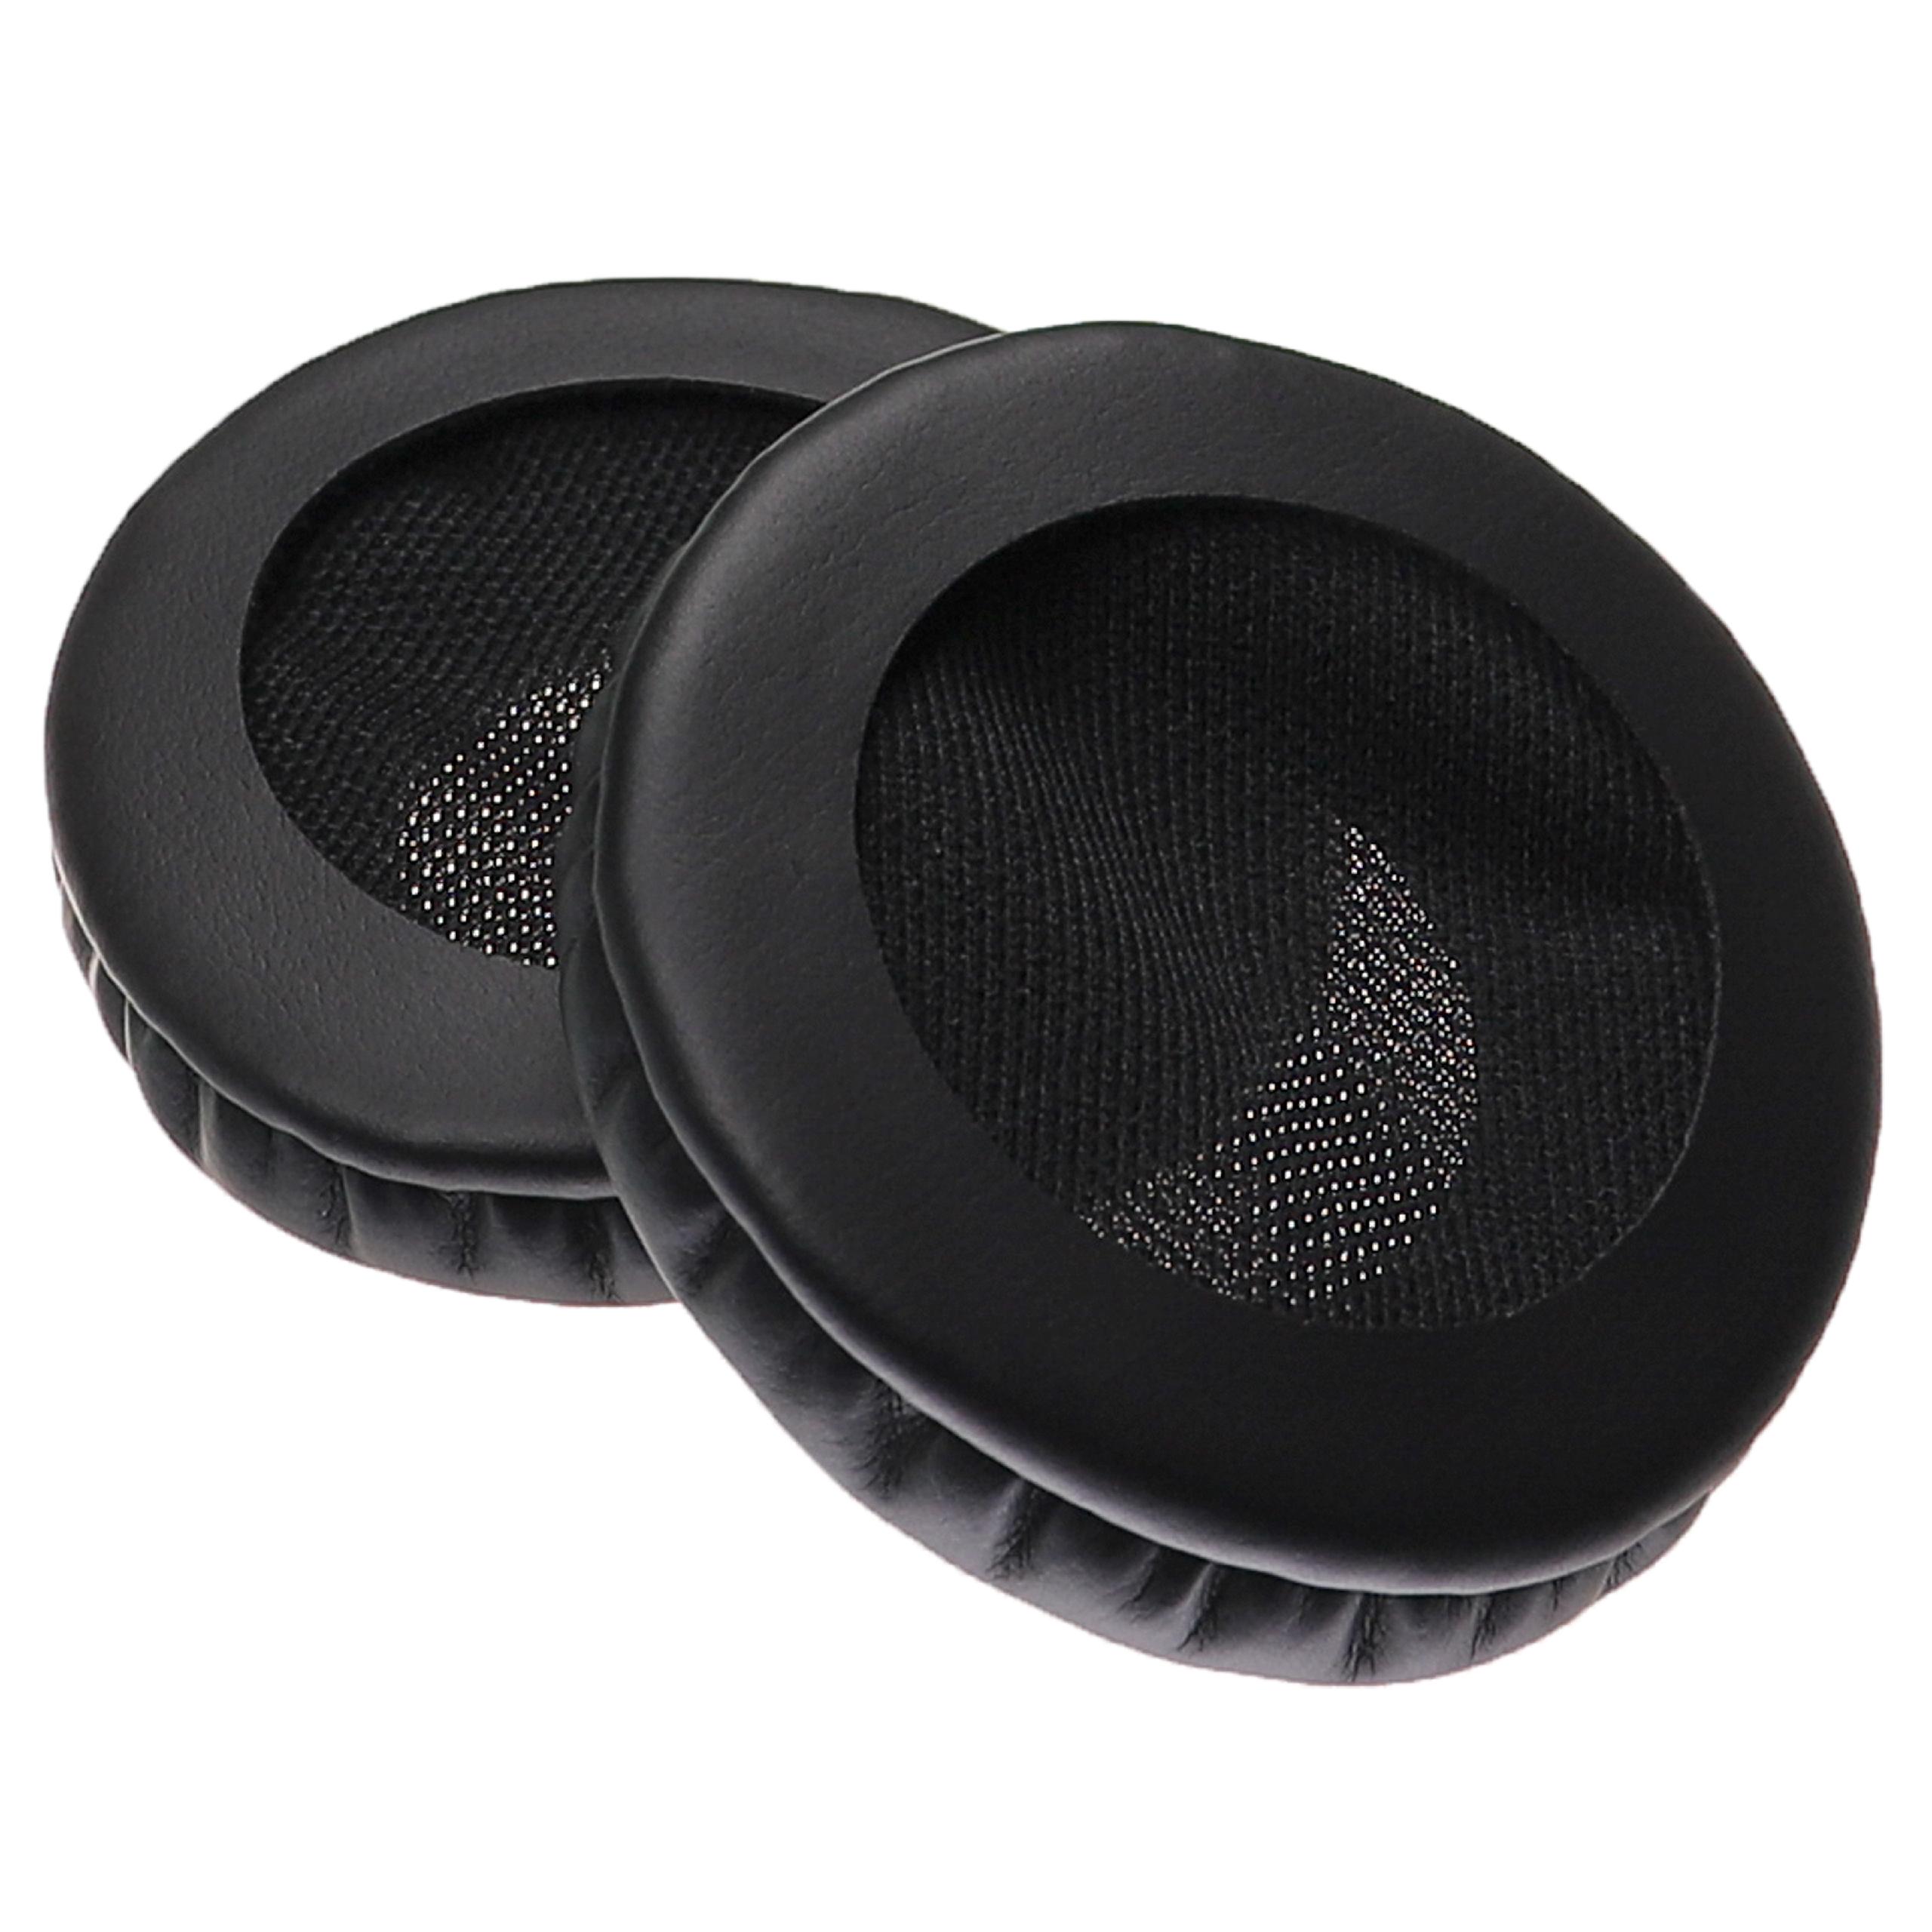 Ohrenpolster passend für Sony MDR-V100 Kopfhörer u.a. - Silikon, 7,2 x 7 cm, 36 mm stark, Schwarz